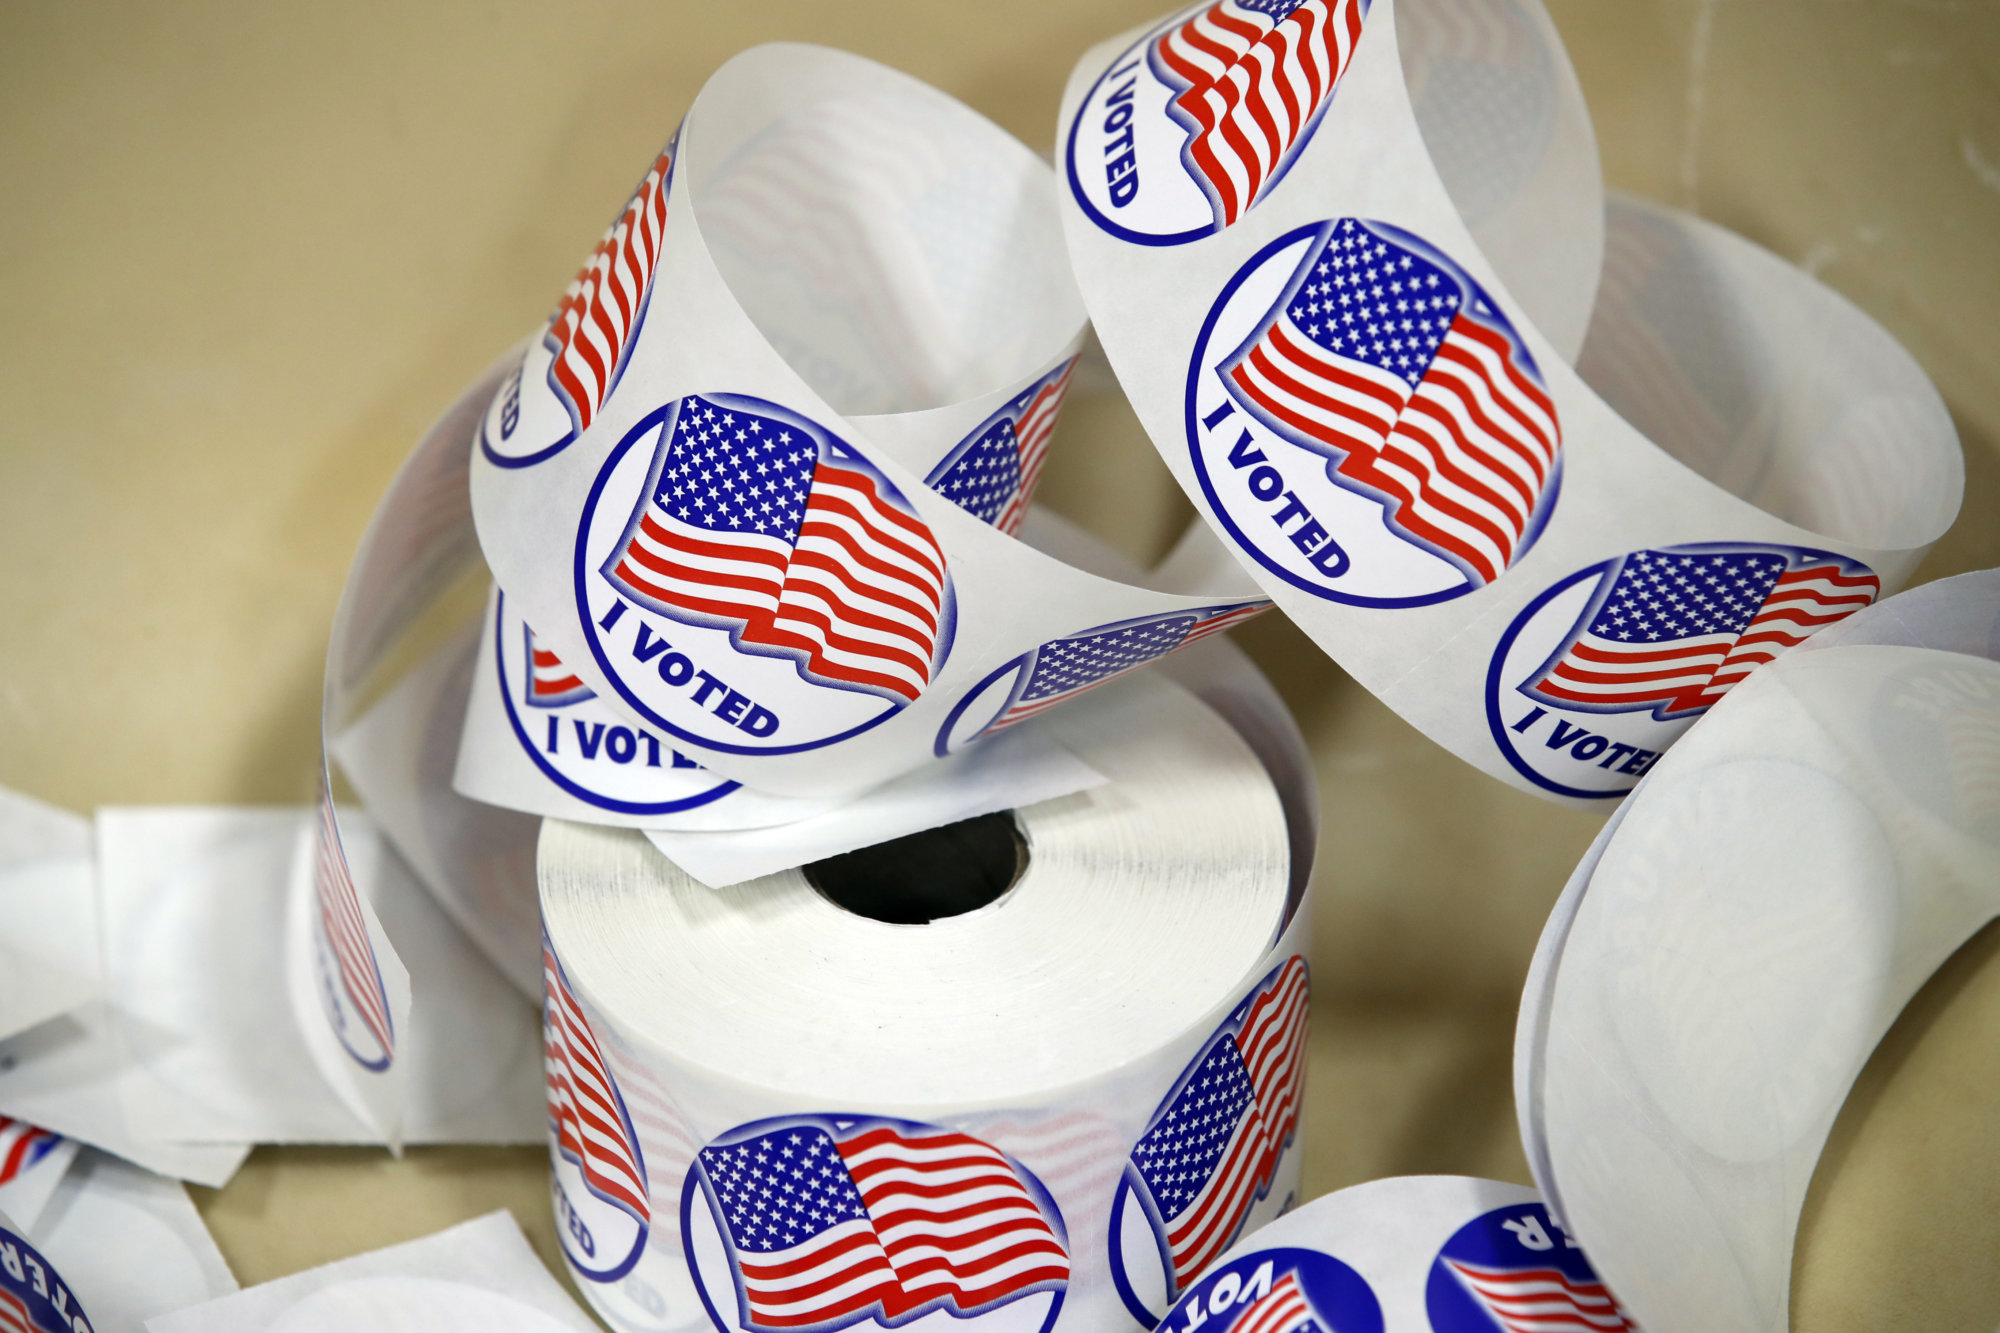 When is the Va. voter registration deadline for the June 12 primaries?